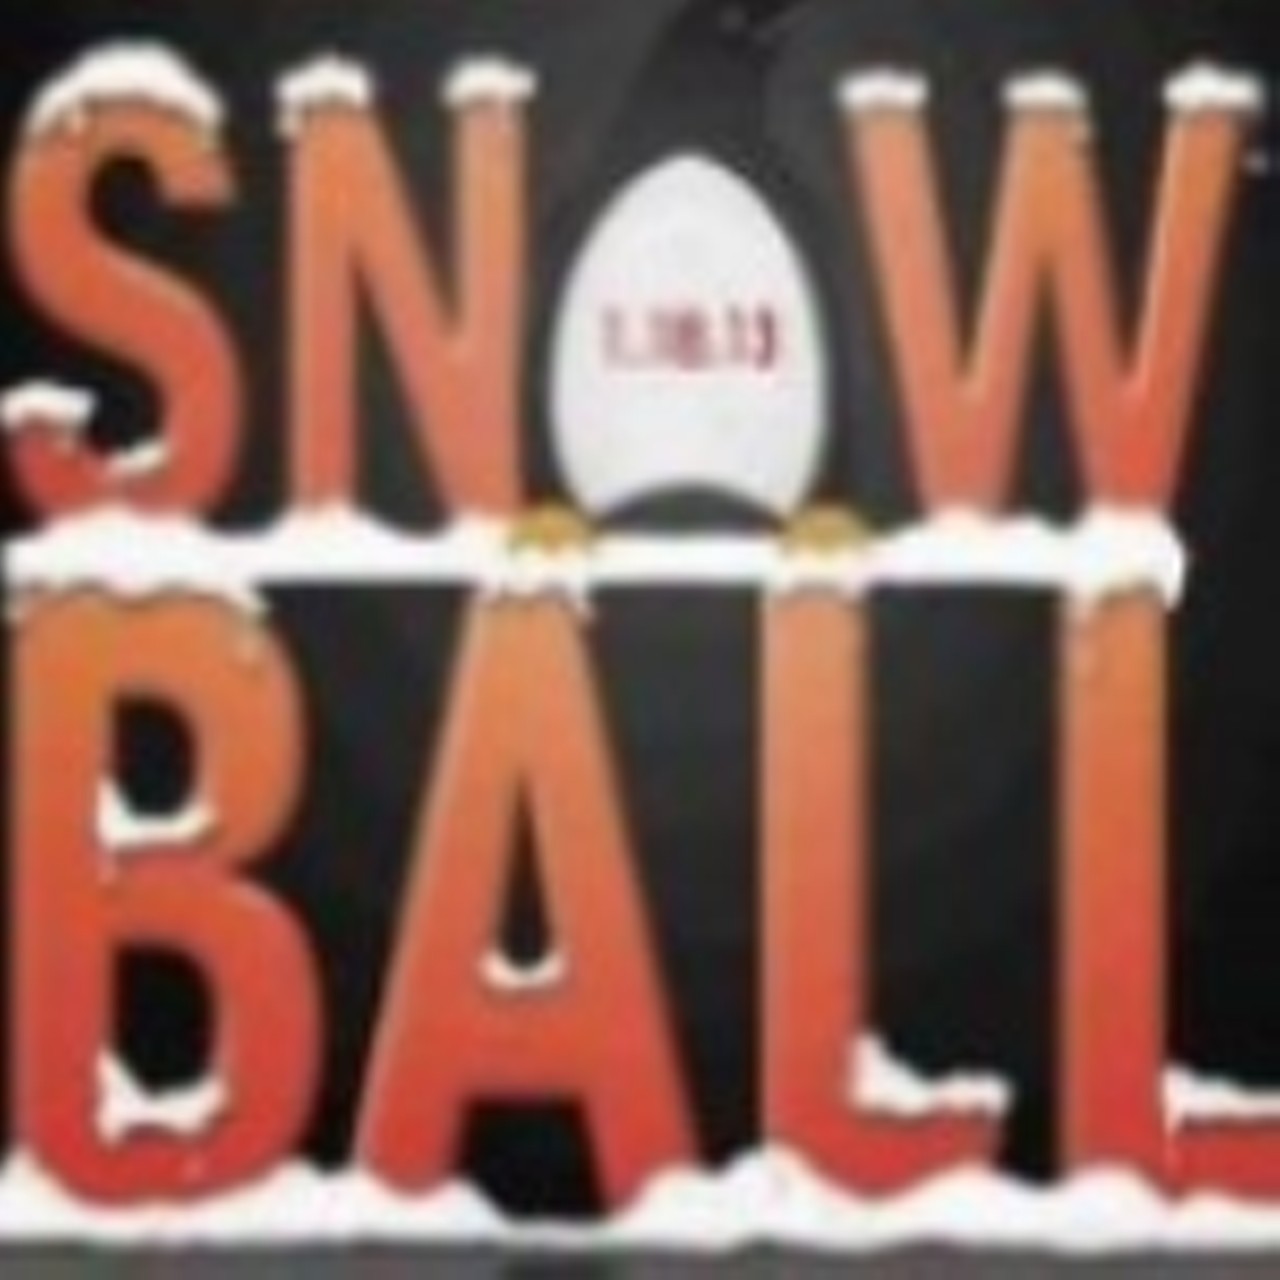 Snow Ball